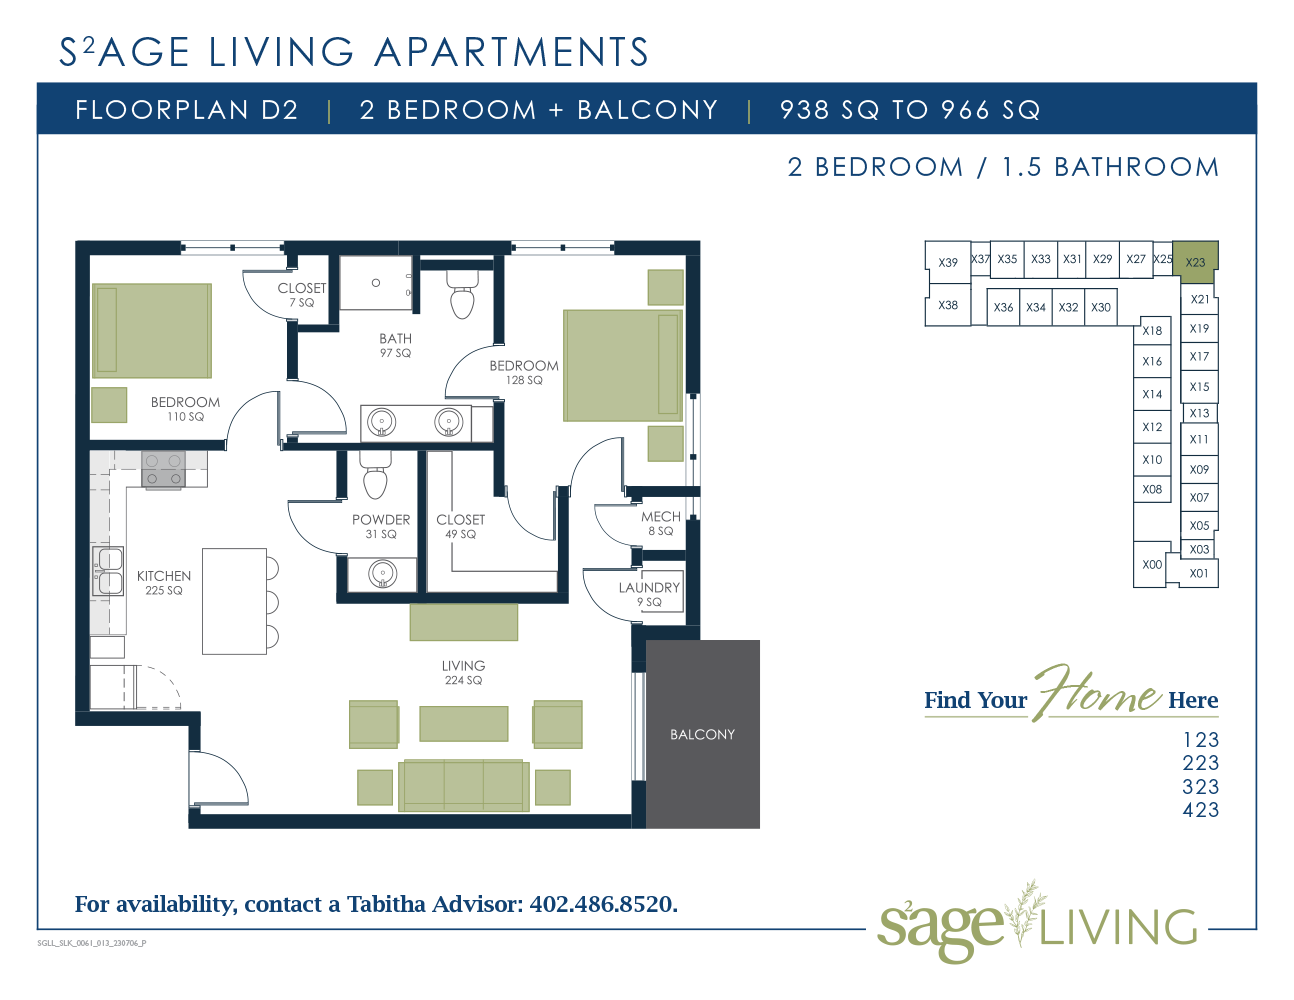 S2age Living Floor Plan, Apartment D2